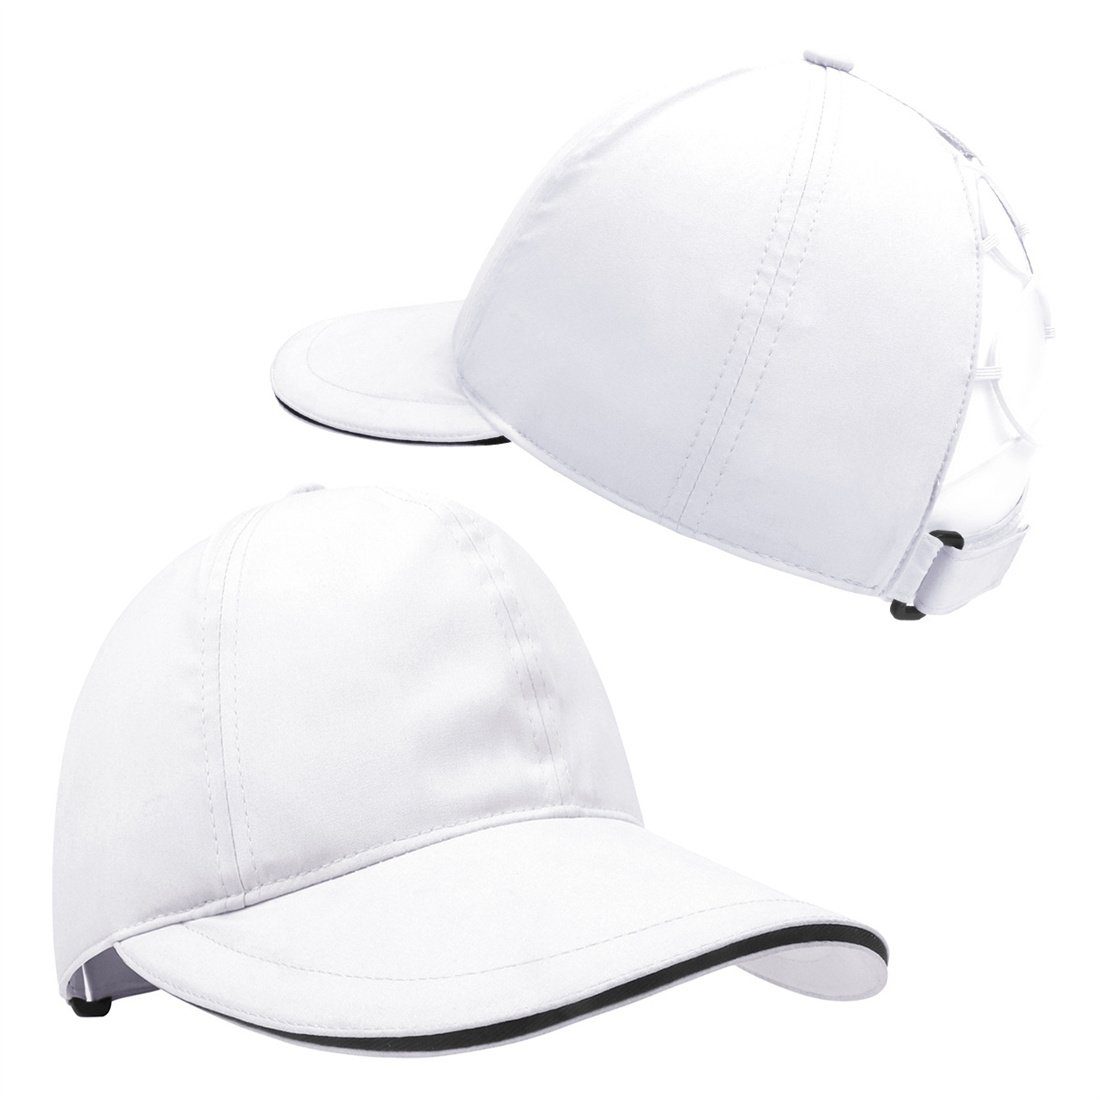 DÖRÖY Baseball Cap Outdoor-Baseballkappe für Frauen,schnell trocknende Kappe,Sonnenblende Weiß